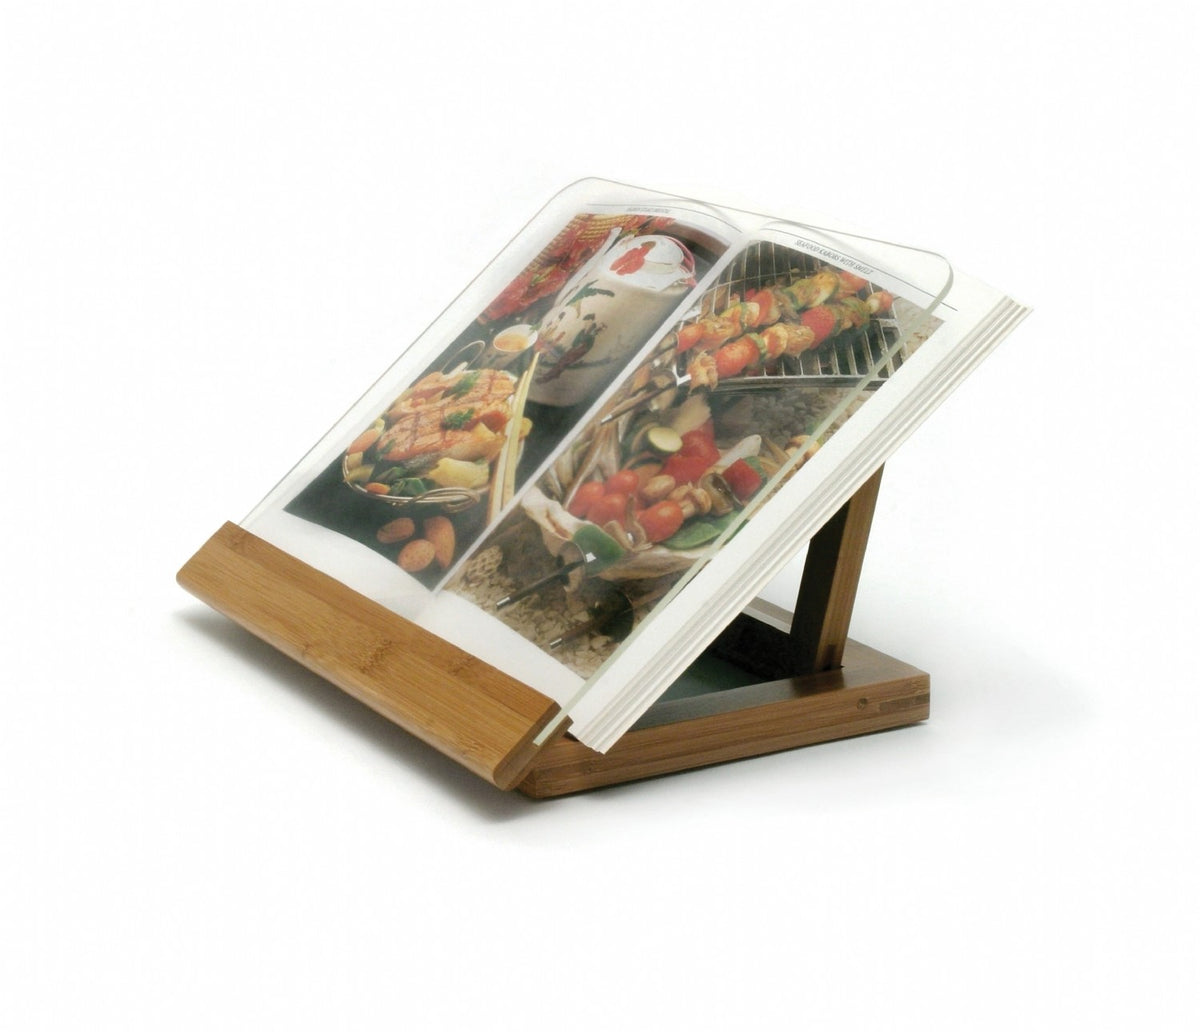 Lipper International Bamboo Tea Box with Acrylic Cover